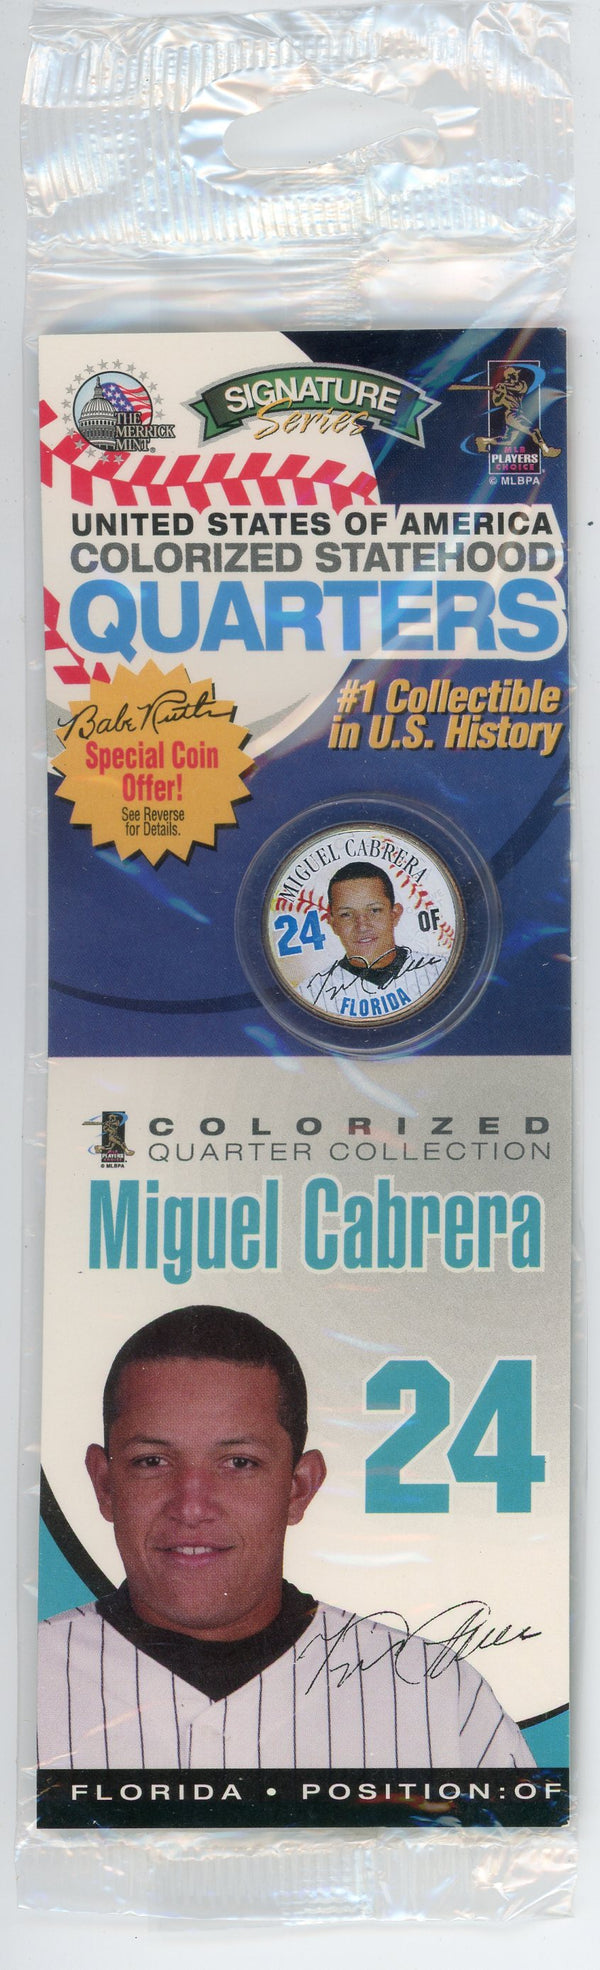 Miguel Cabrera Colorized Statehood Quarter